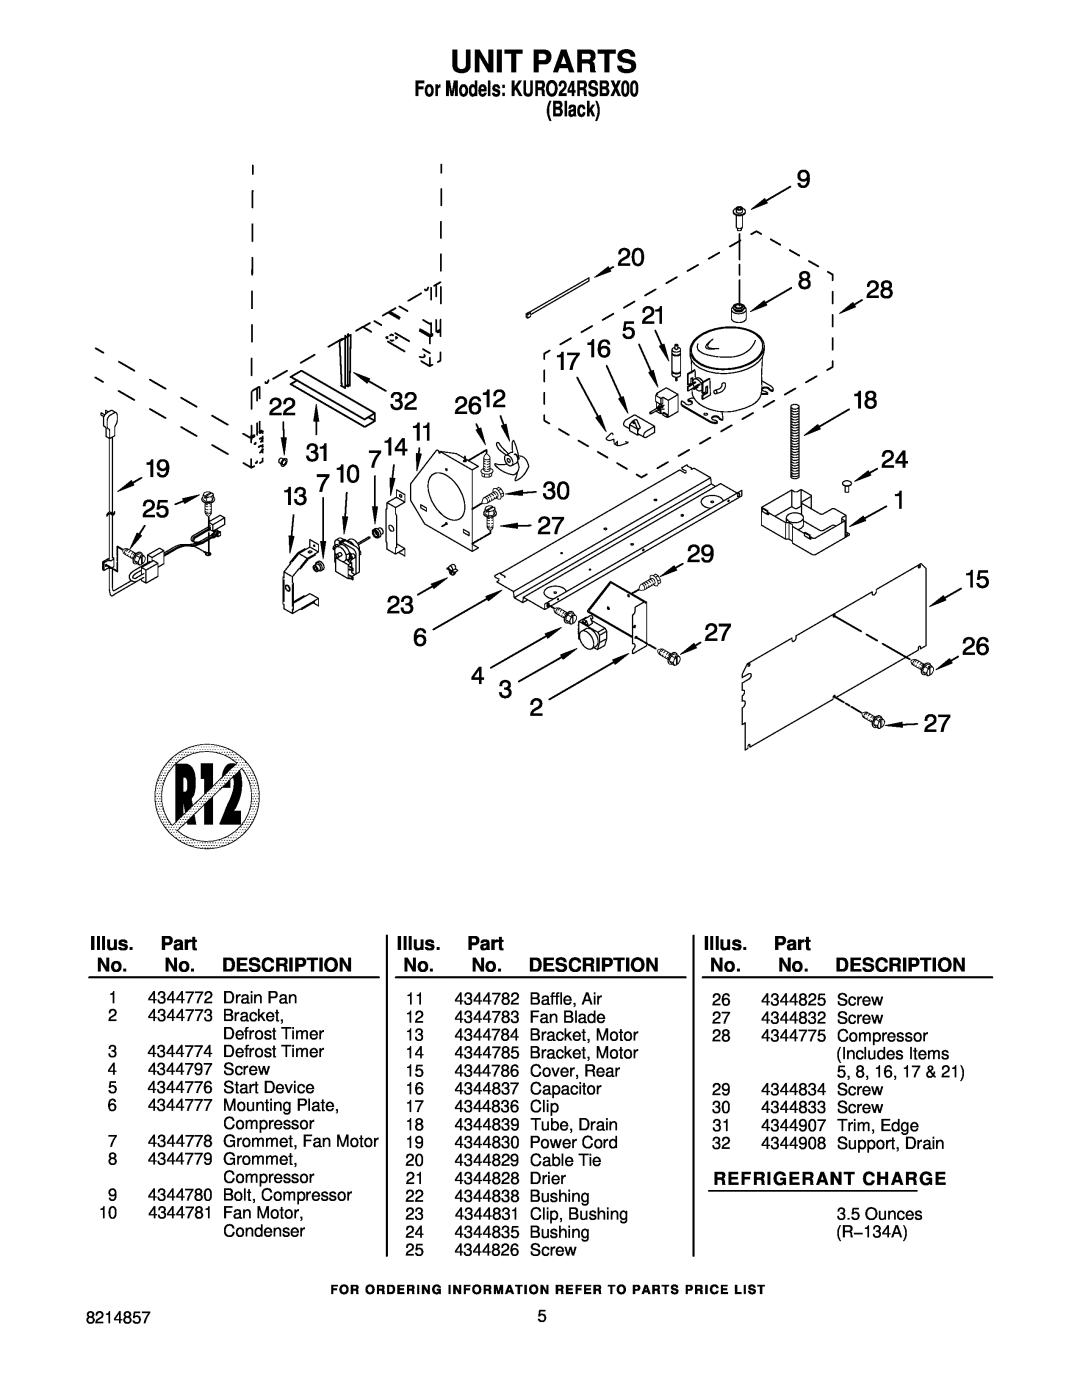 KitchenAid KURO24RSBX00 manual Unit Parts, Refrigerant Charge, Illus. Part No. No. DESCRIPTION 